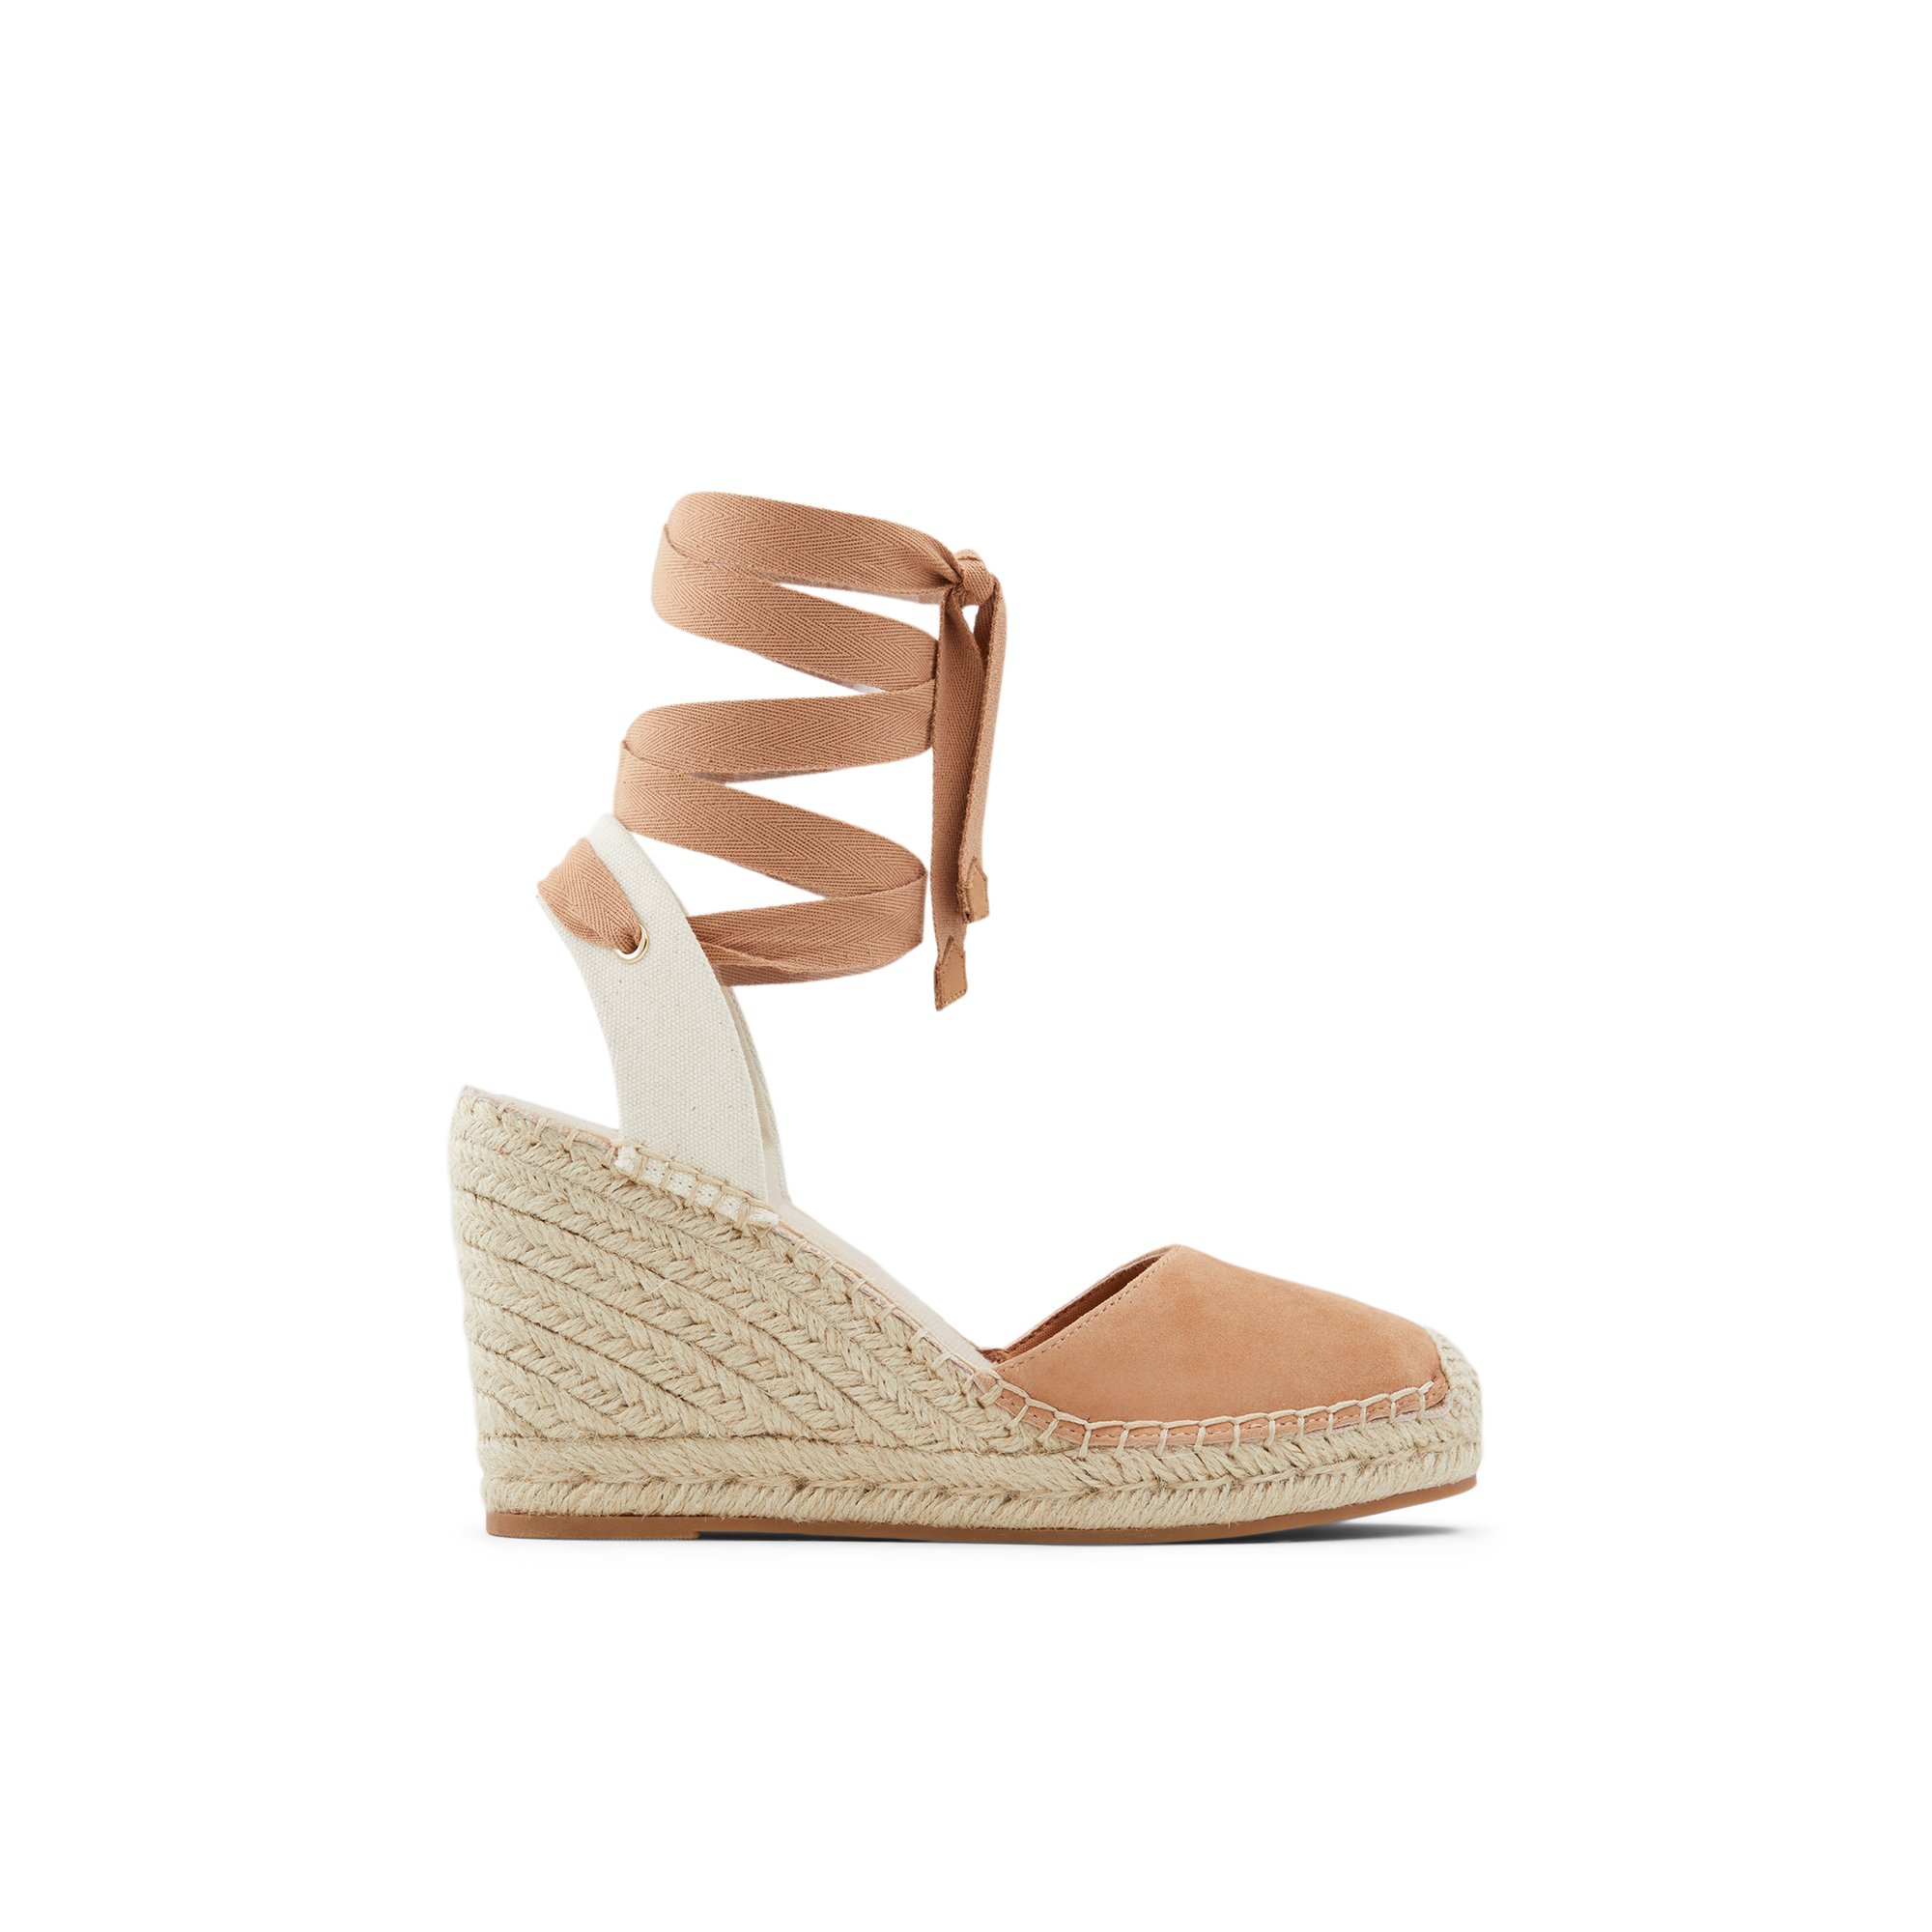 ALDO Efemina - Women's Wedge Sandals - Brown